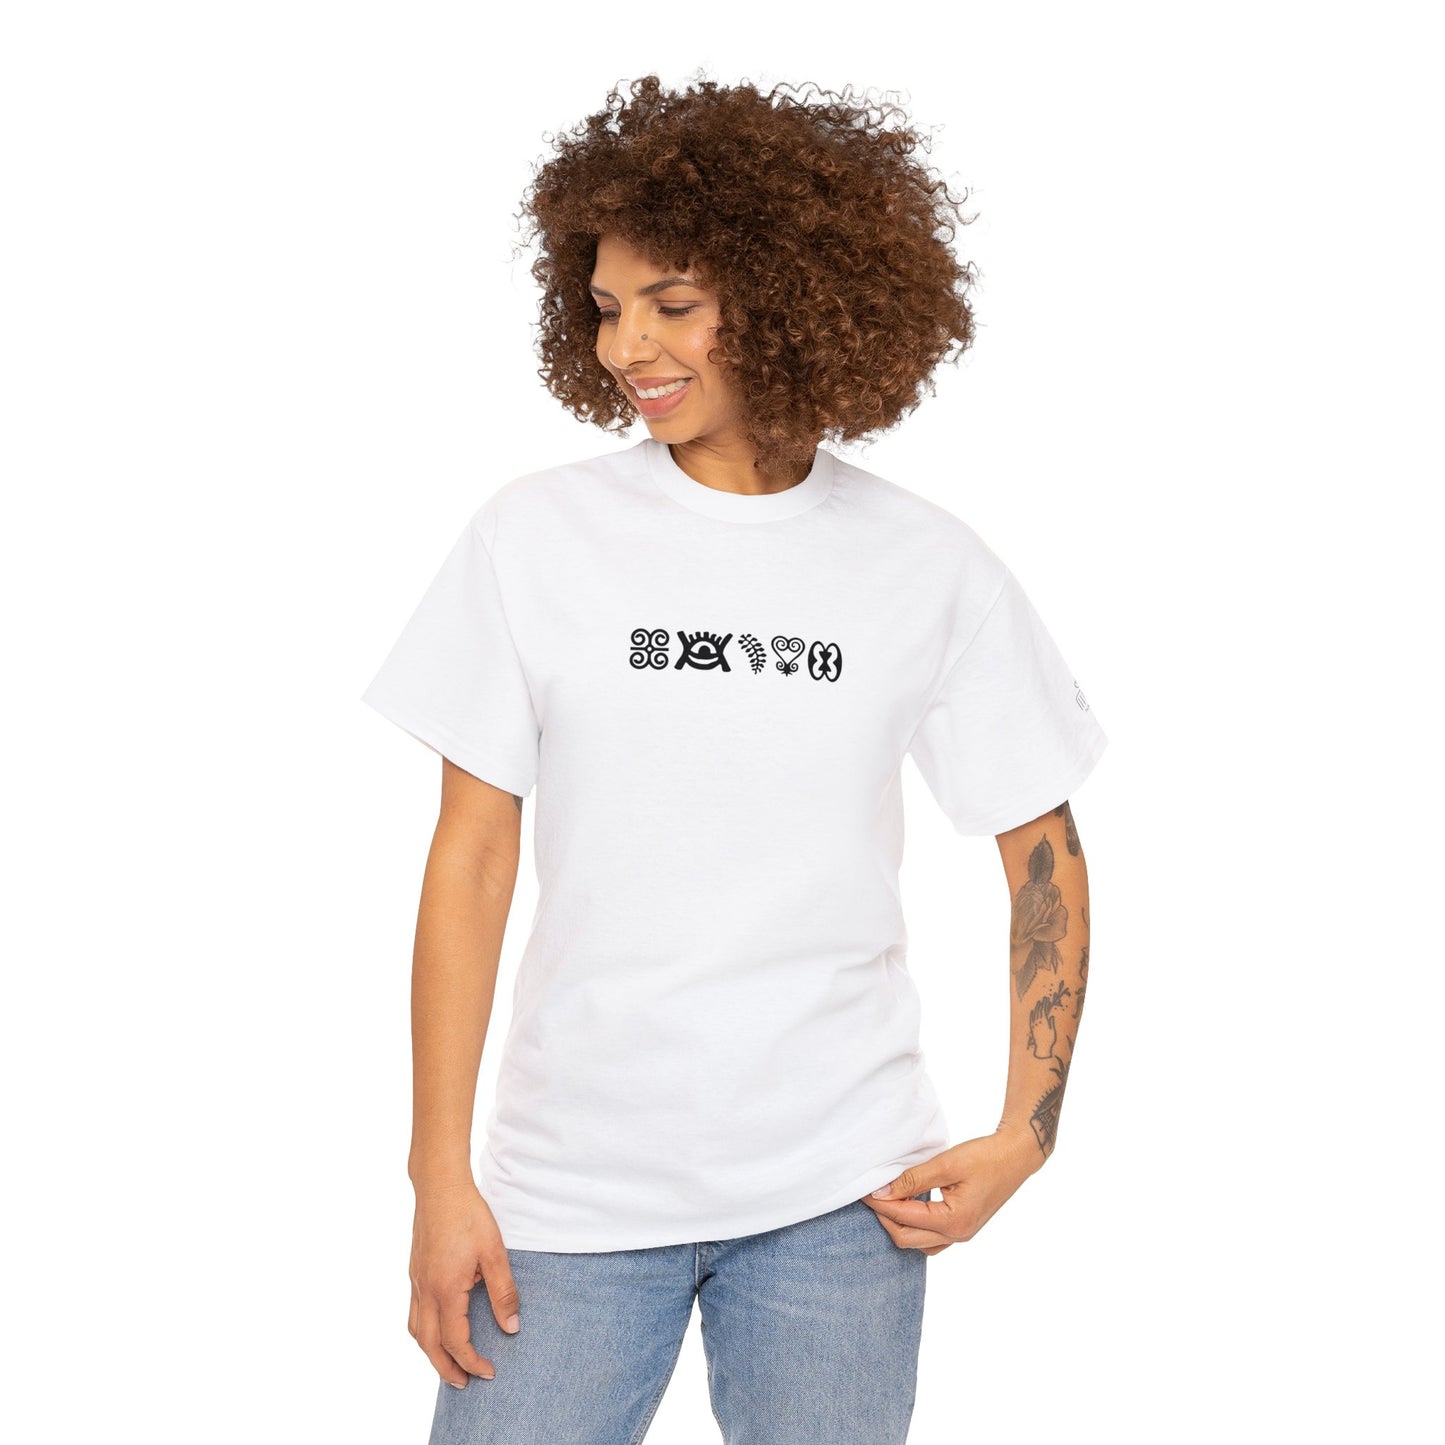 Dwannini mmen T-shirt